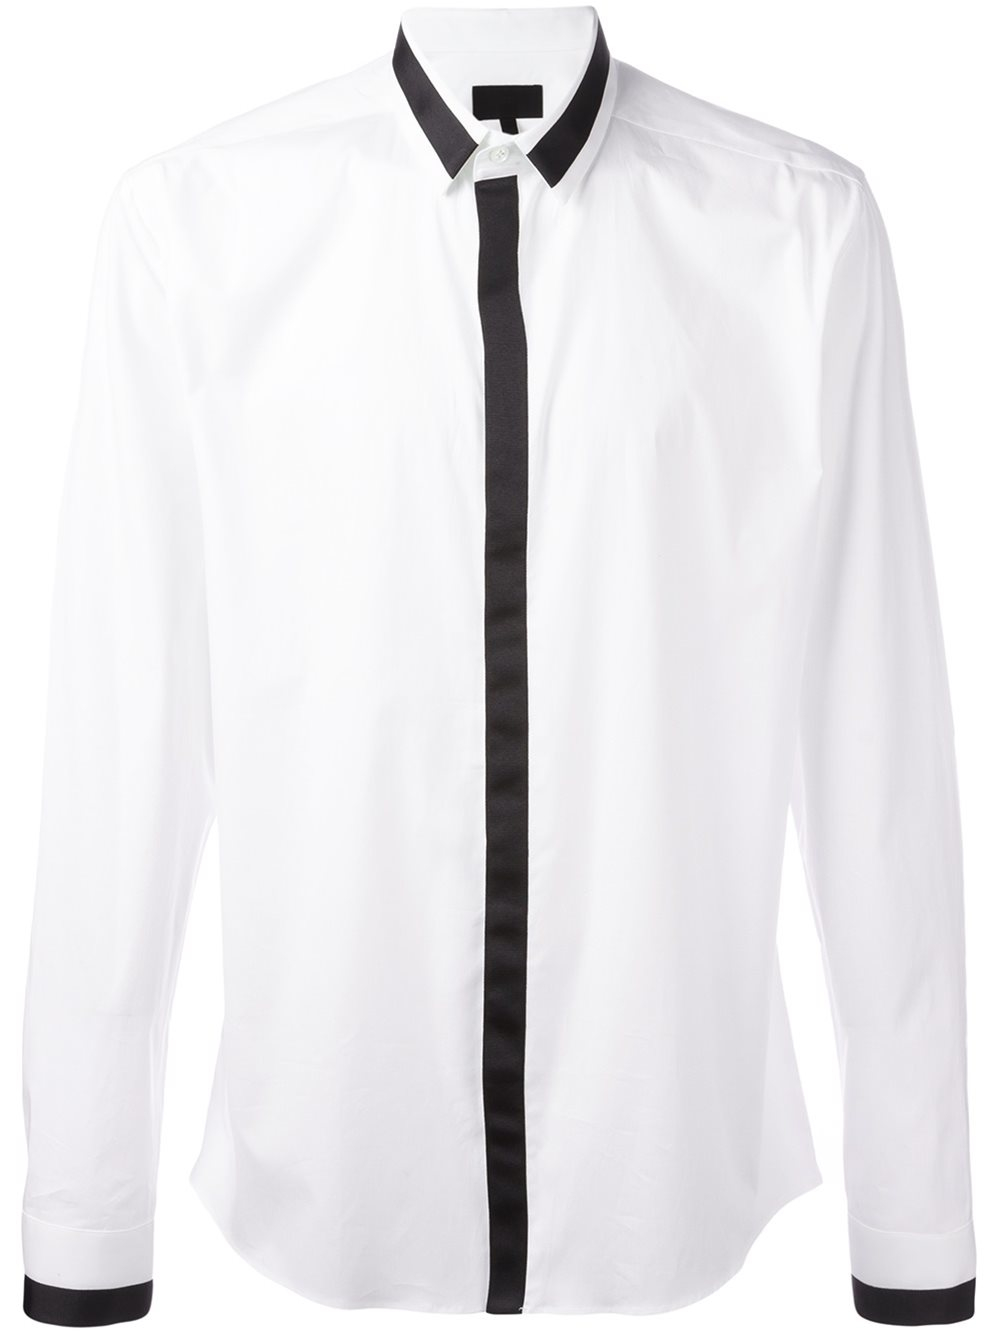 Lyst - Les Hommes Hidden Button Placket Shirt in White for Men